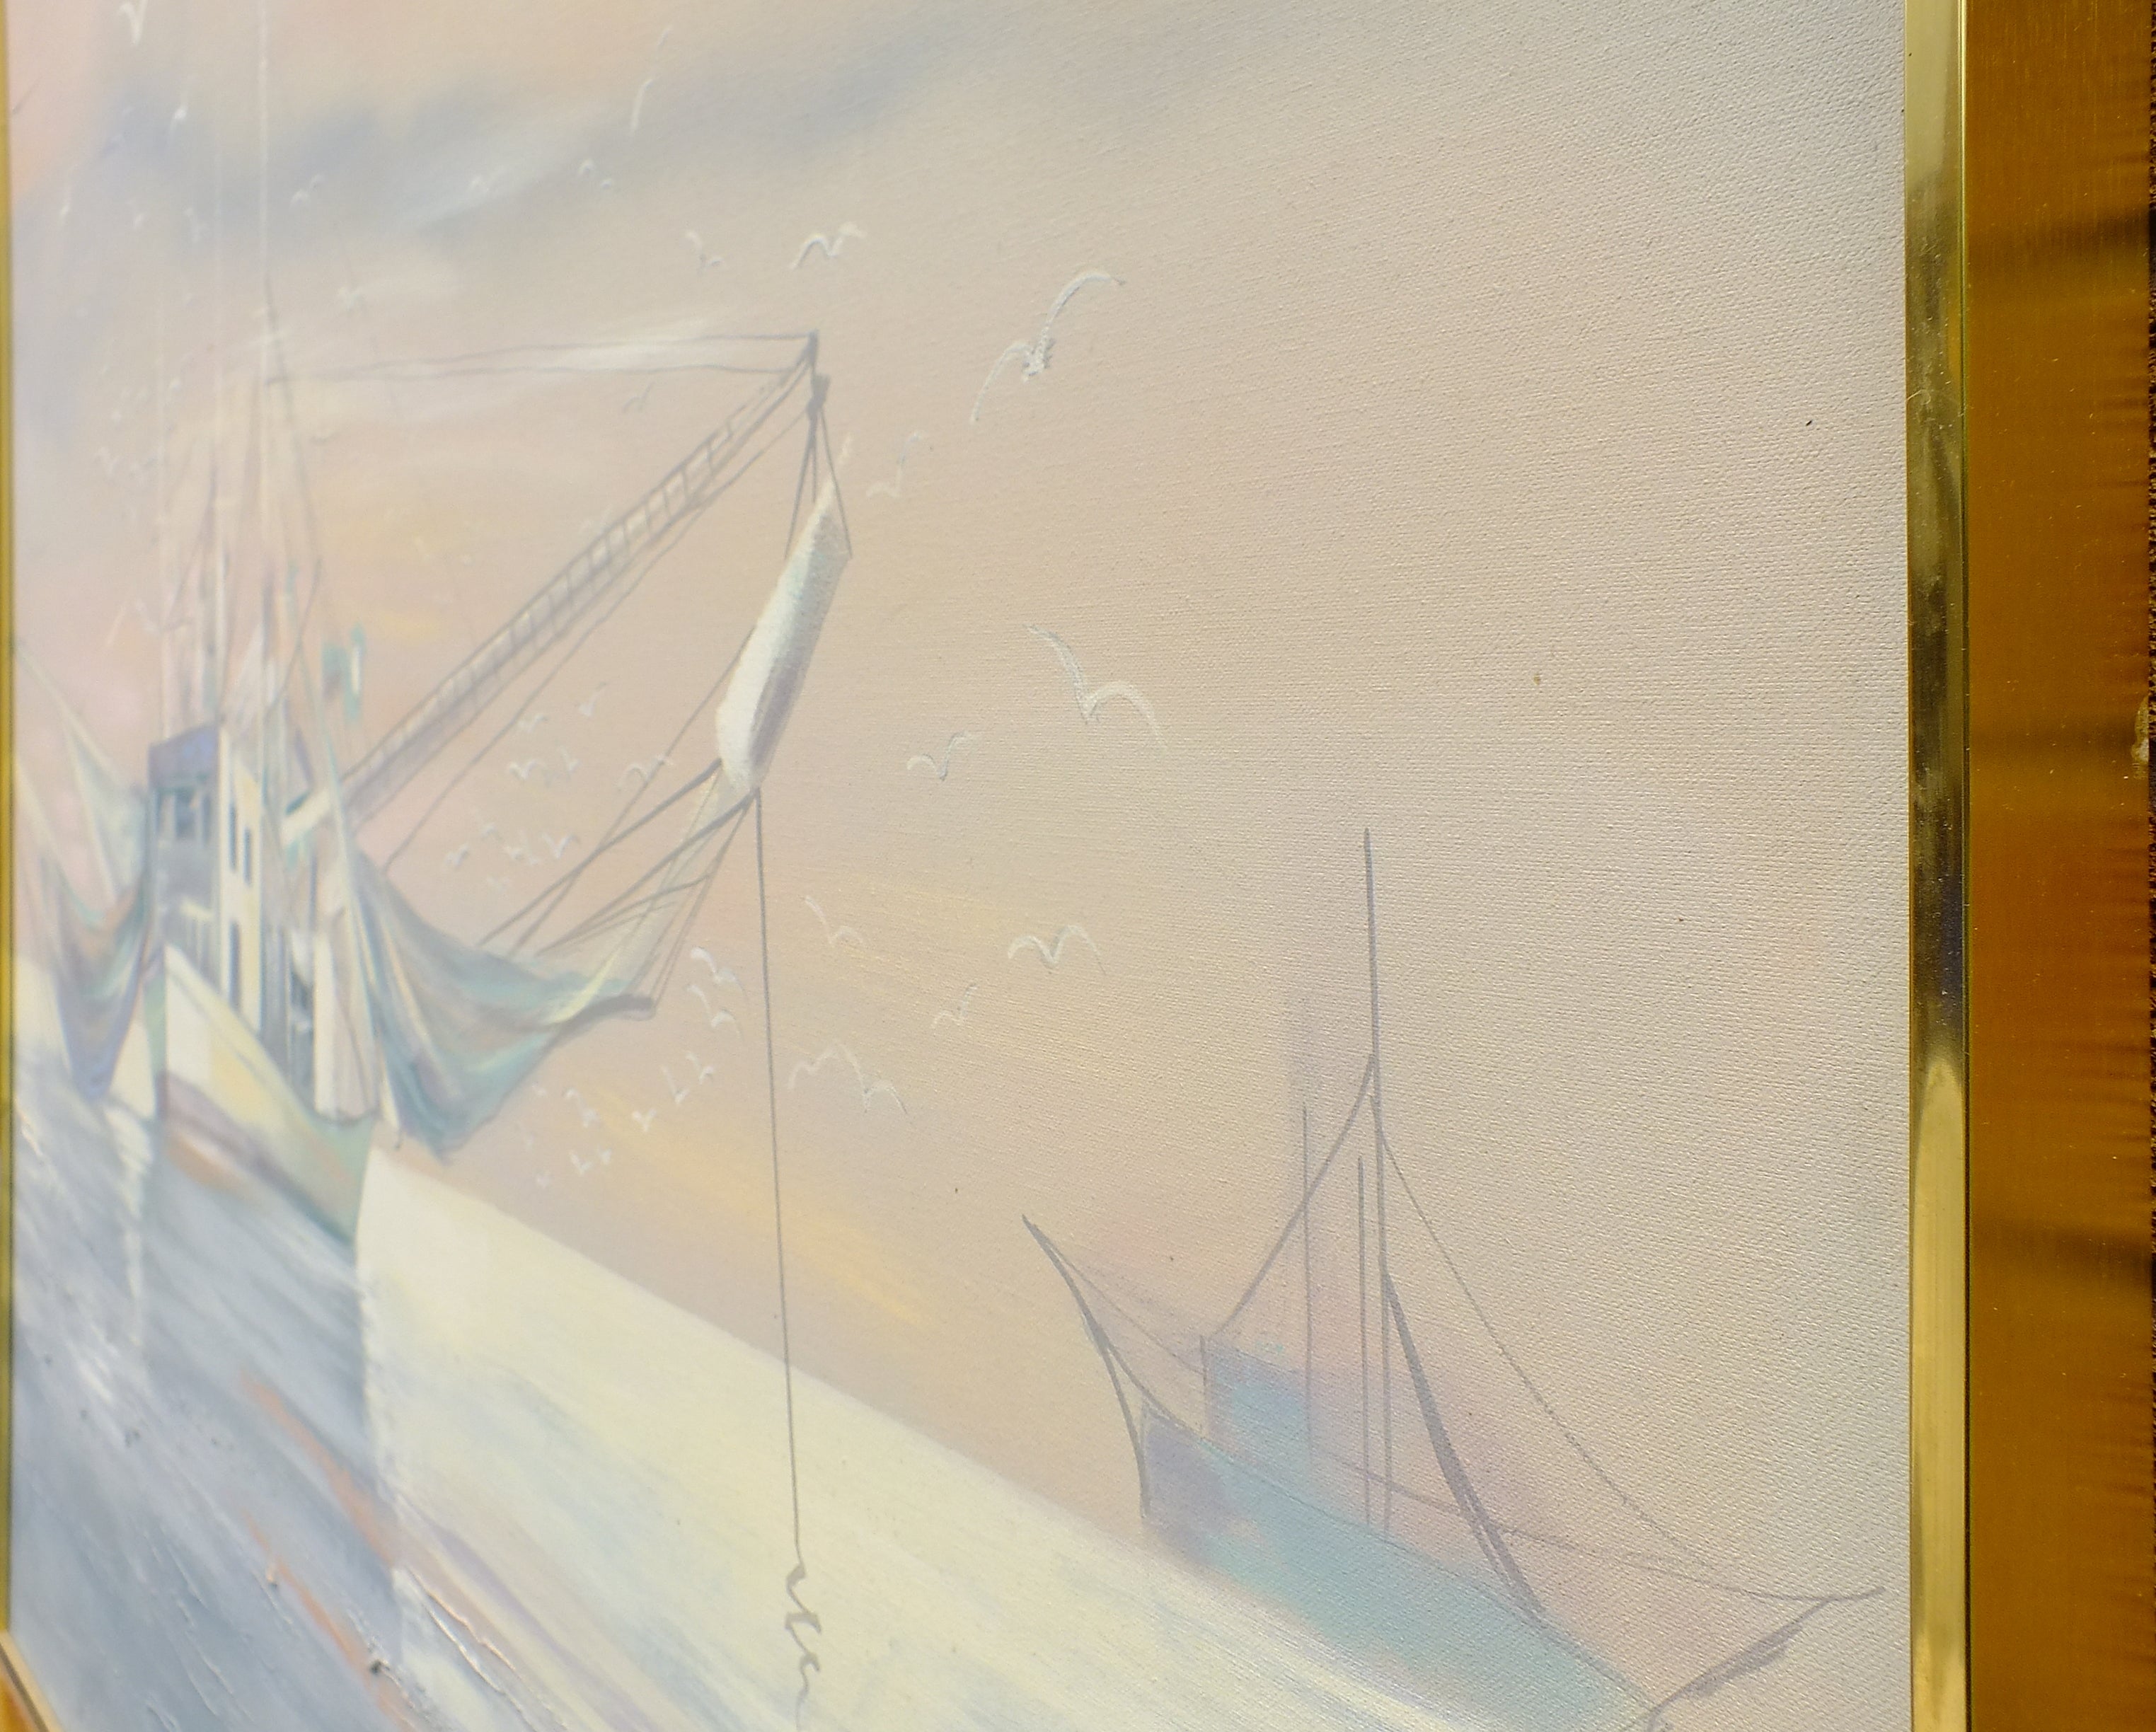 Fishing Boats Sunset Painting Huge Coastal Wall Art Signed Framed